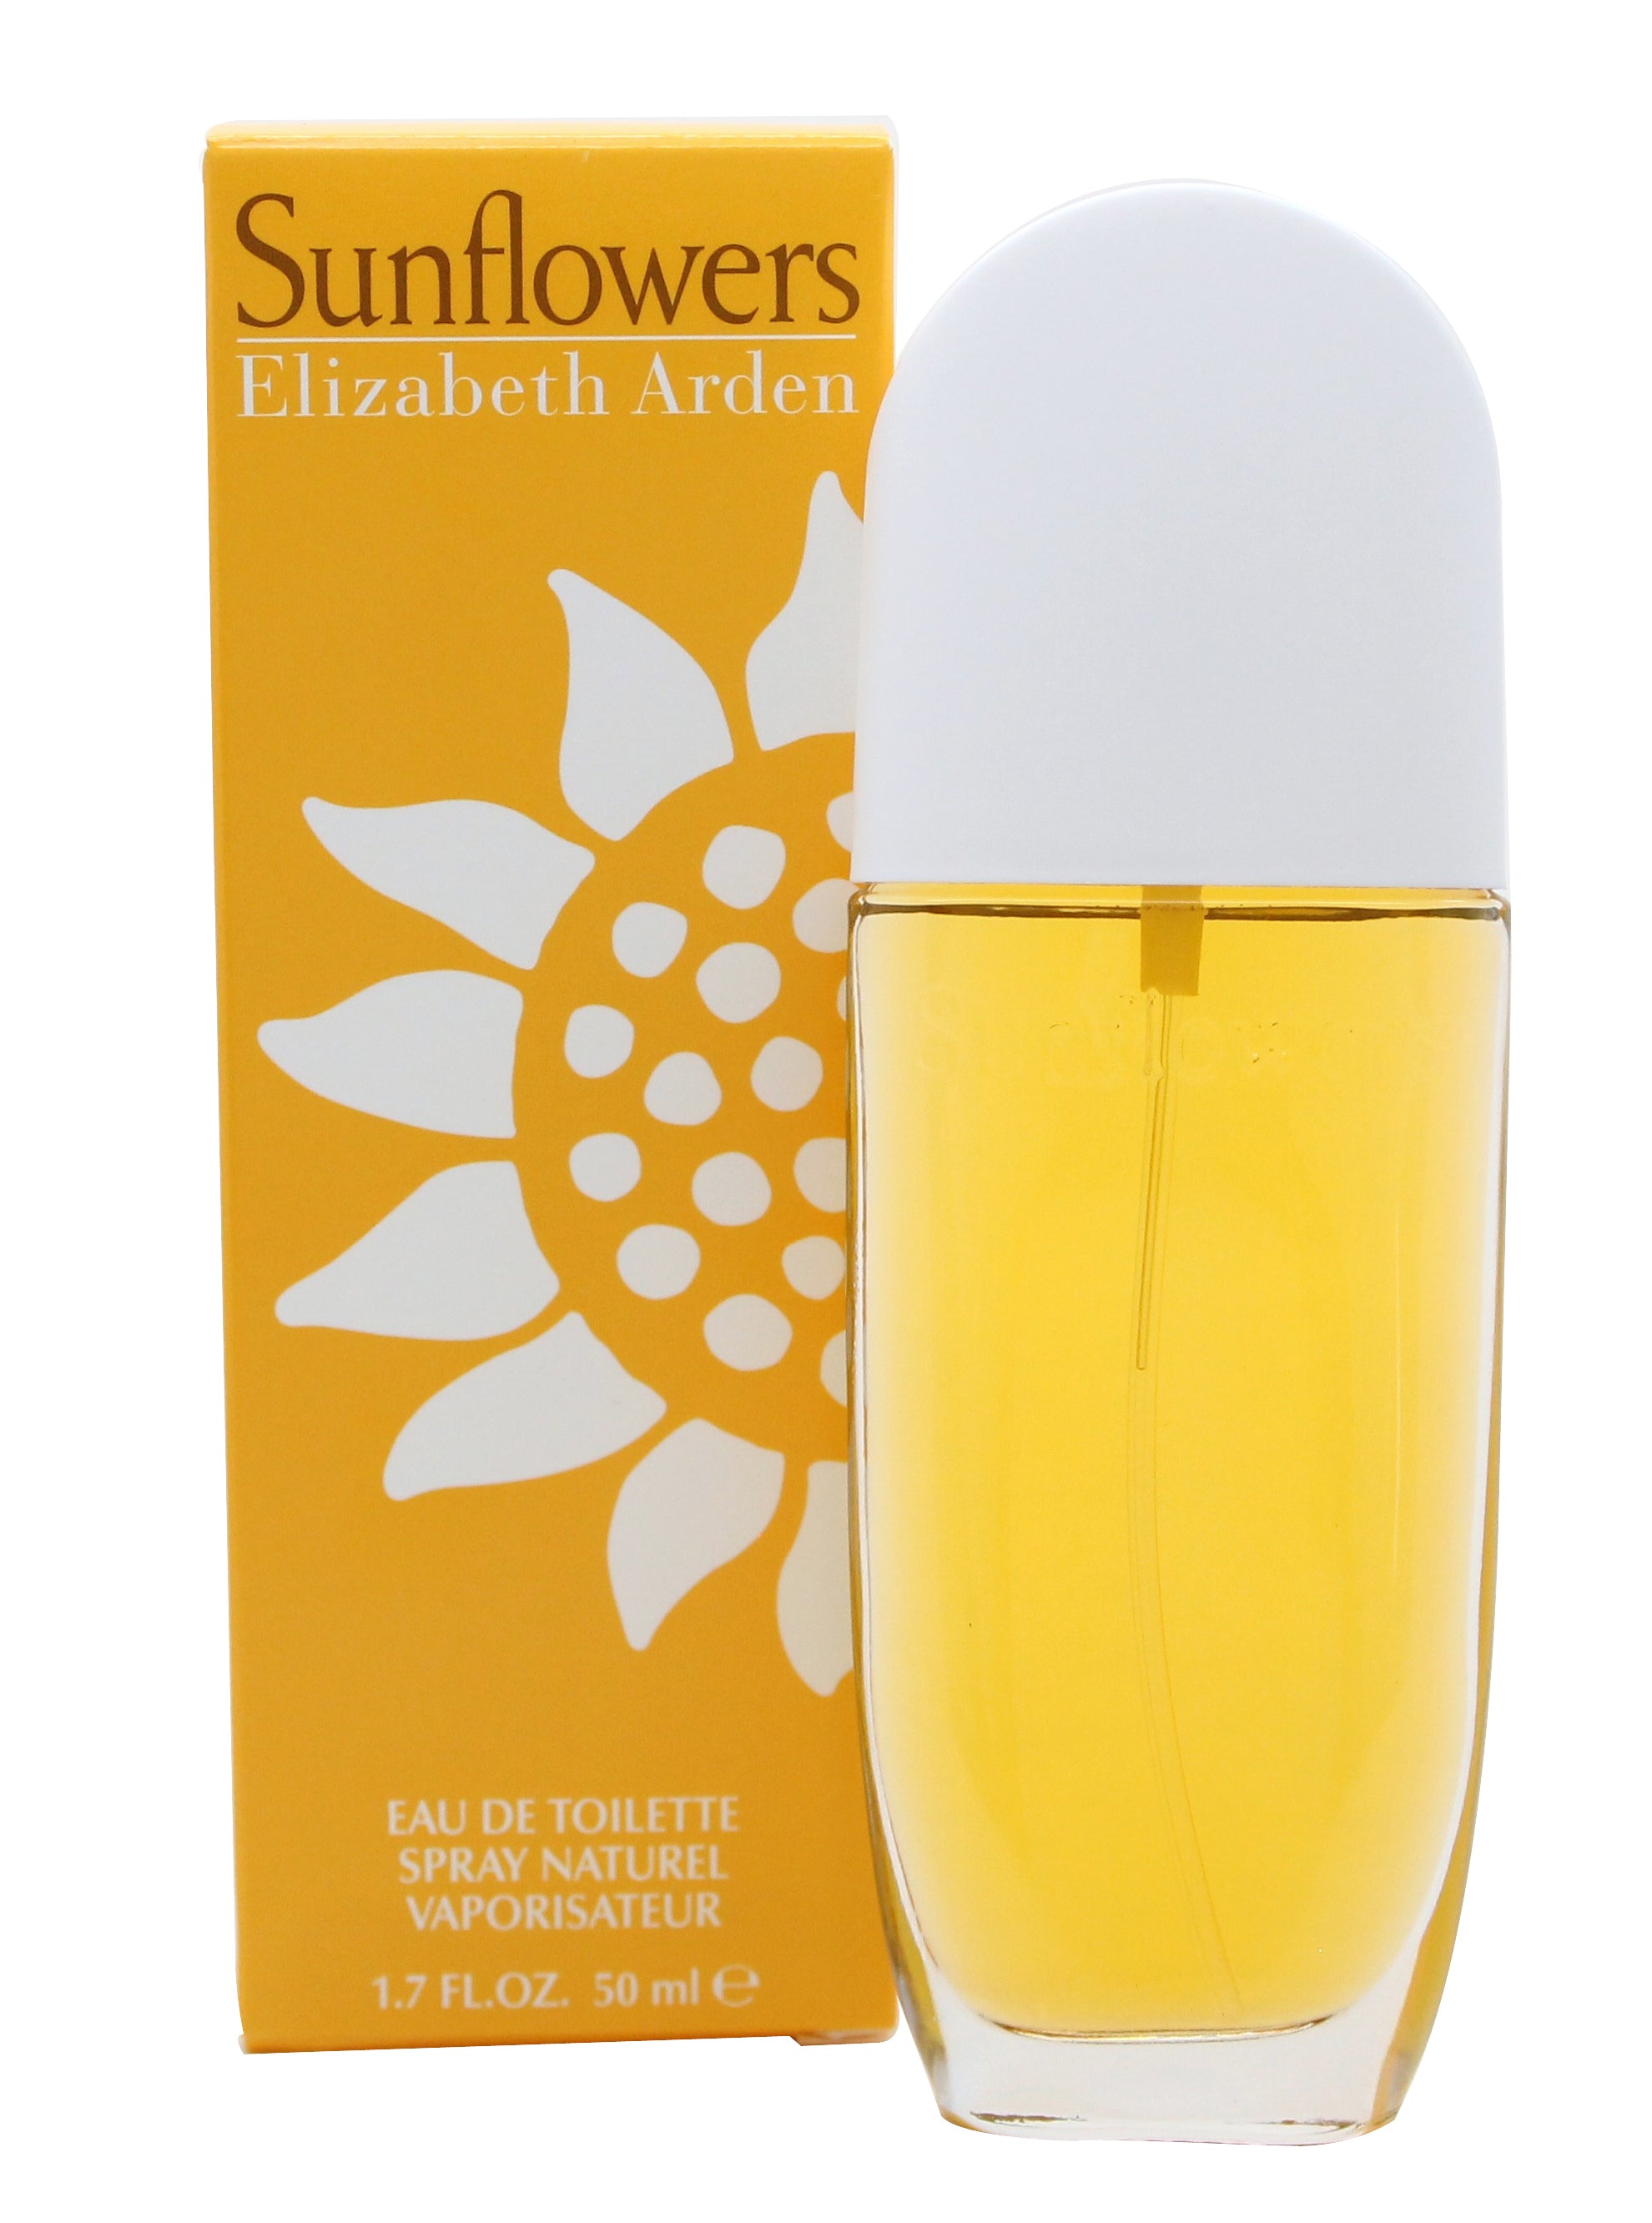 View Elizabeth Arden Sunflowers Eau de Toilette 50ml Spray information